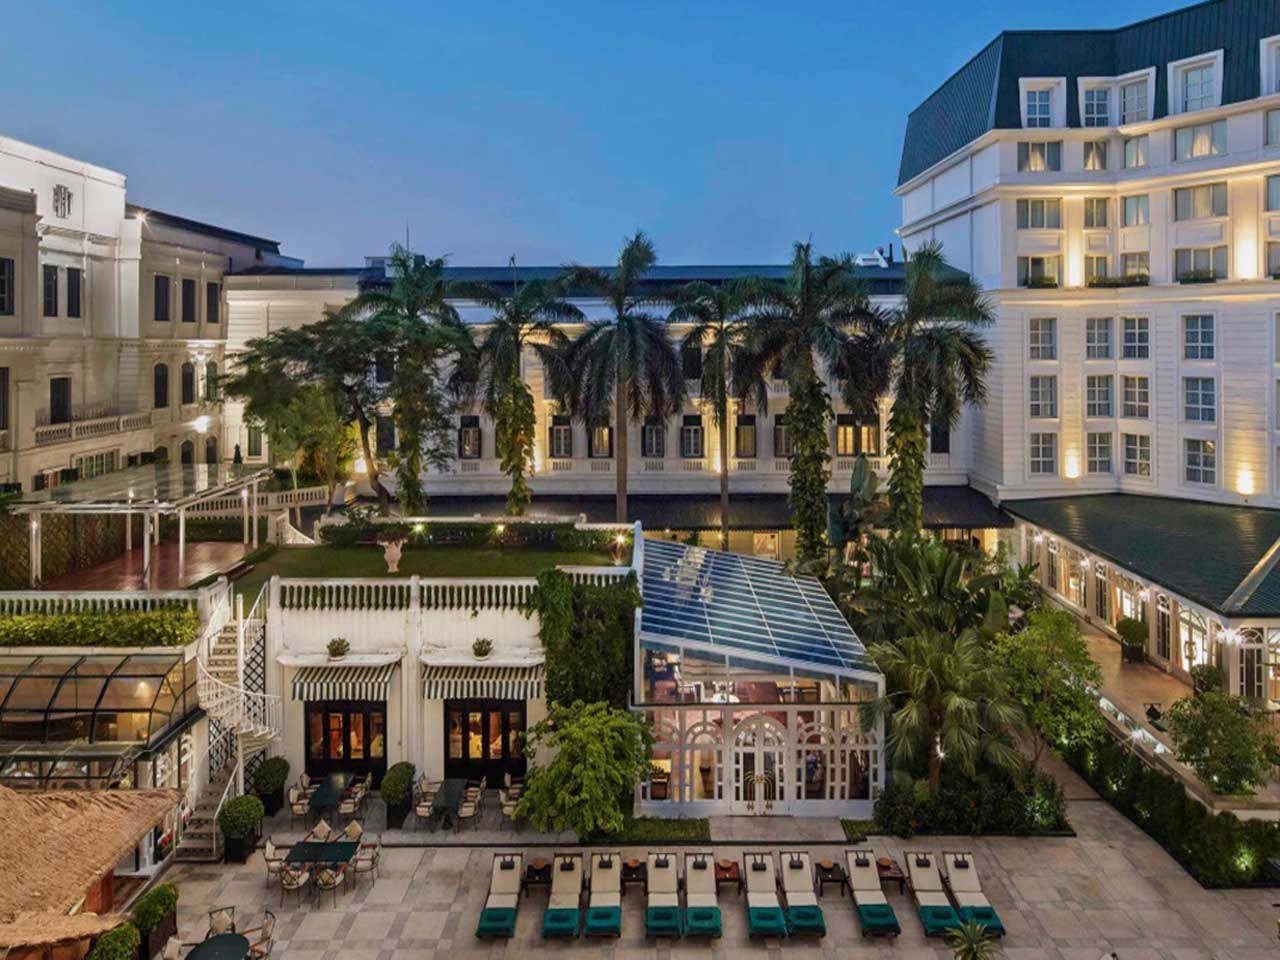 Sofitel Legend Metropole Hanoi - Top 10 luxury hotels in Vietnam